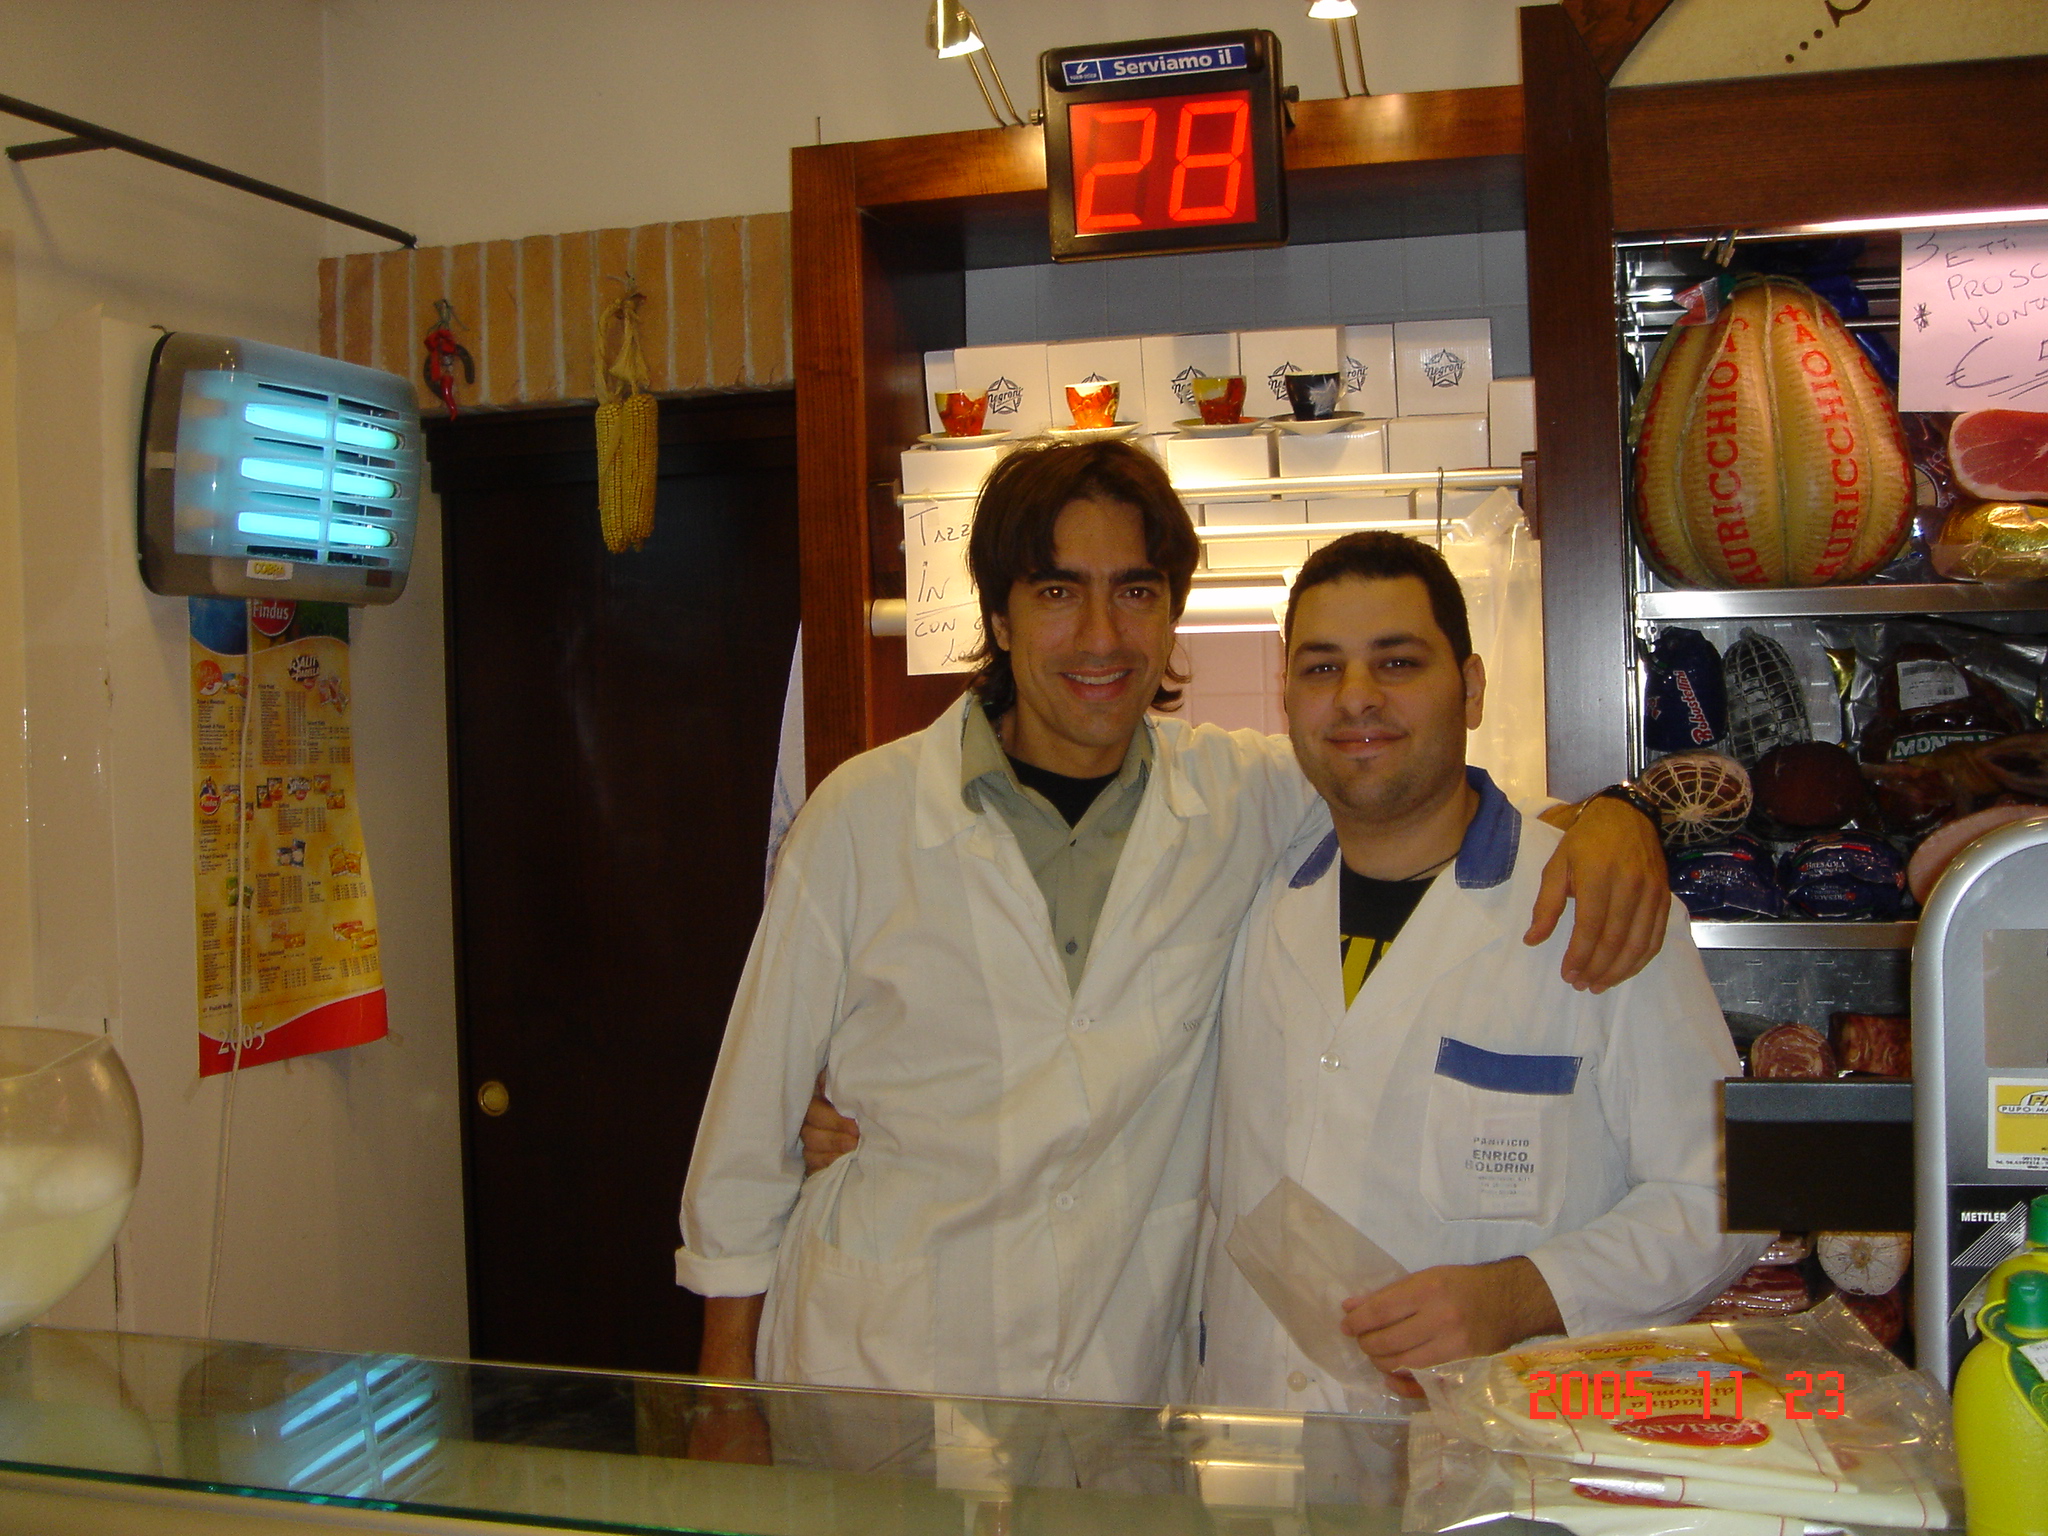 Roman and Guiseppe in Trastevere bakery